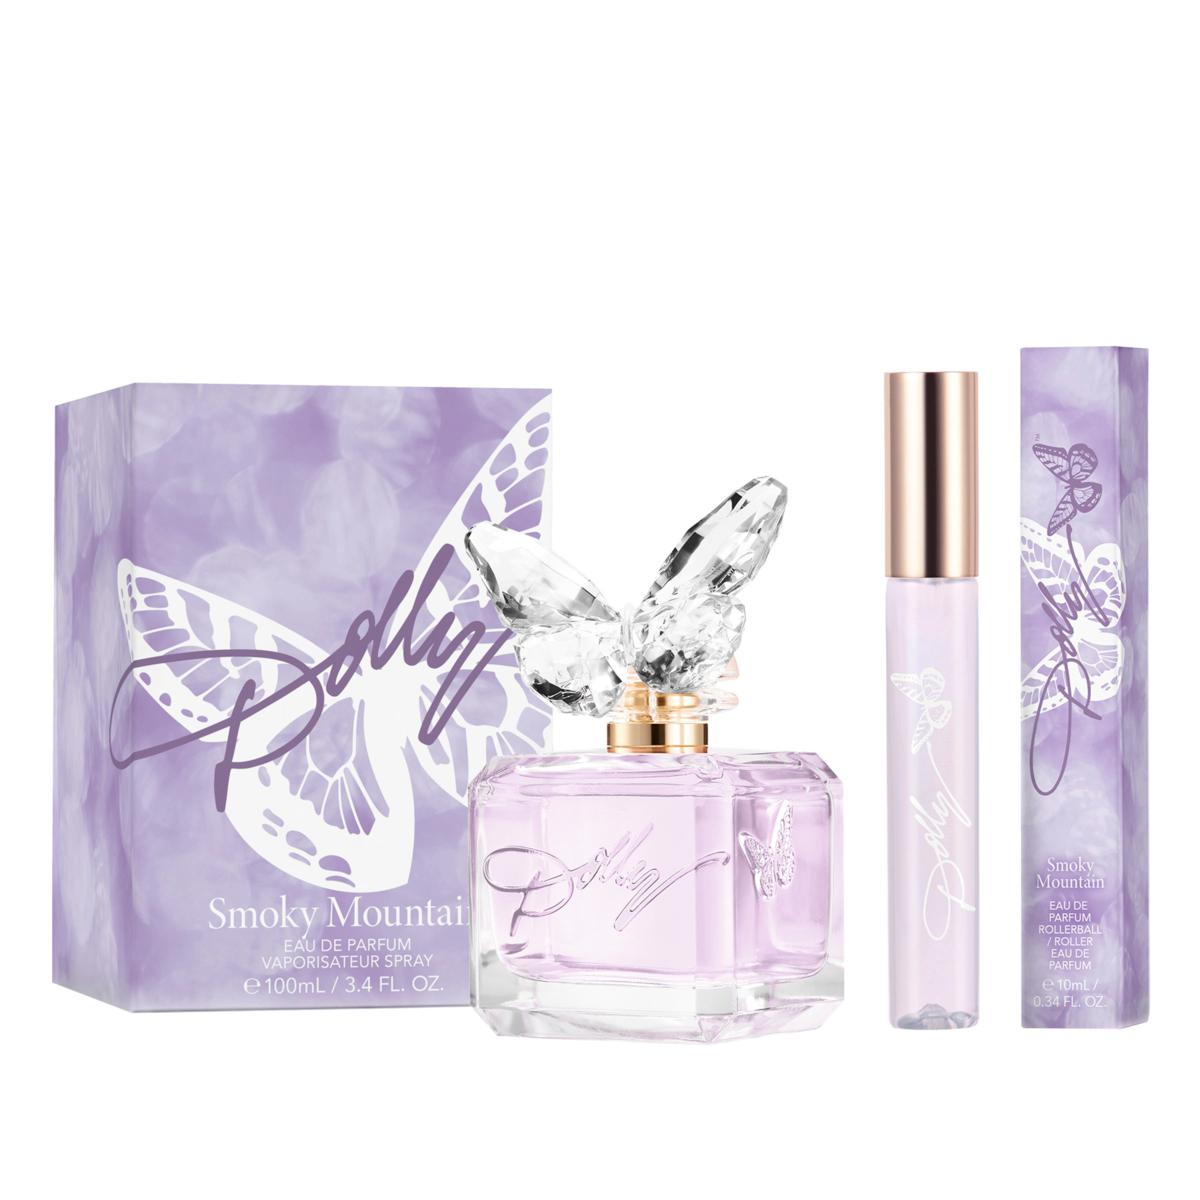 Smoky Mountain Eau de Parfum Set for Women by Dolly Parton, Product image 1